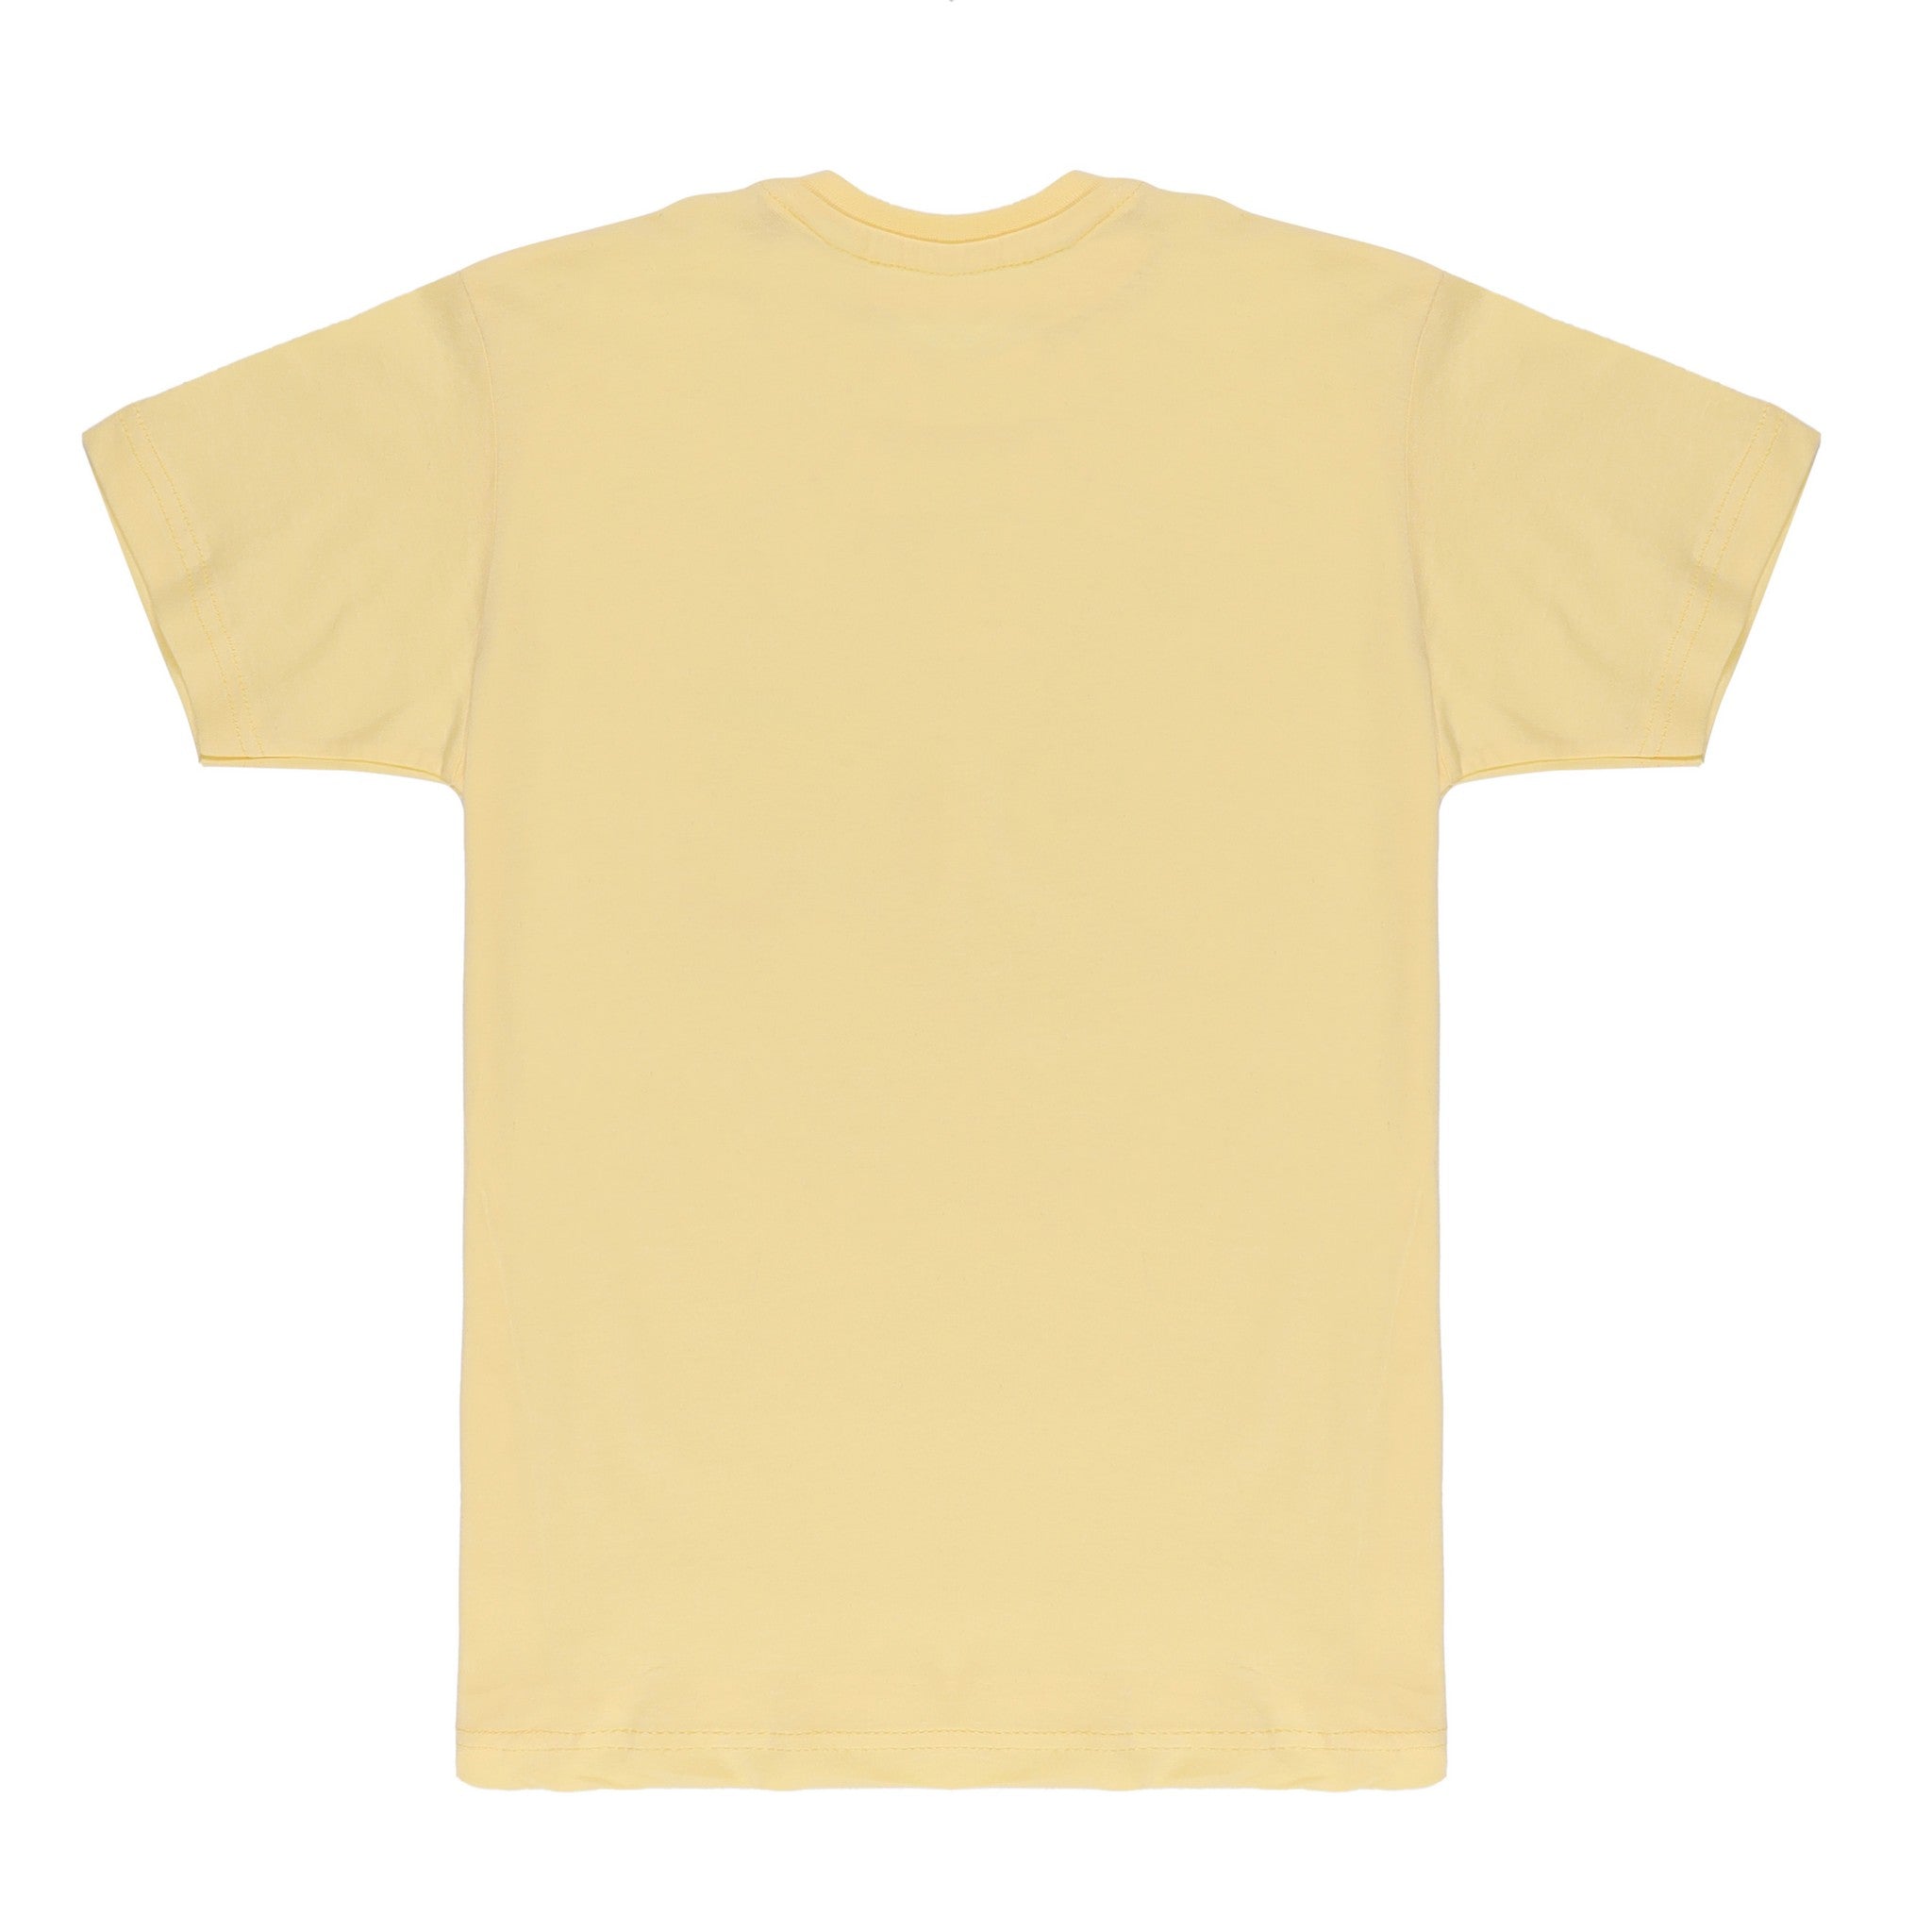 Fast Print Yellow T-Shirt